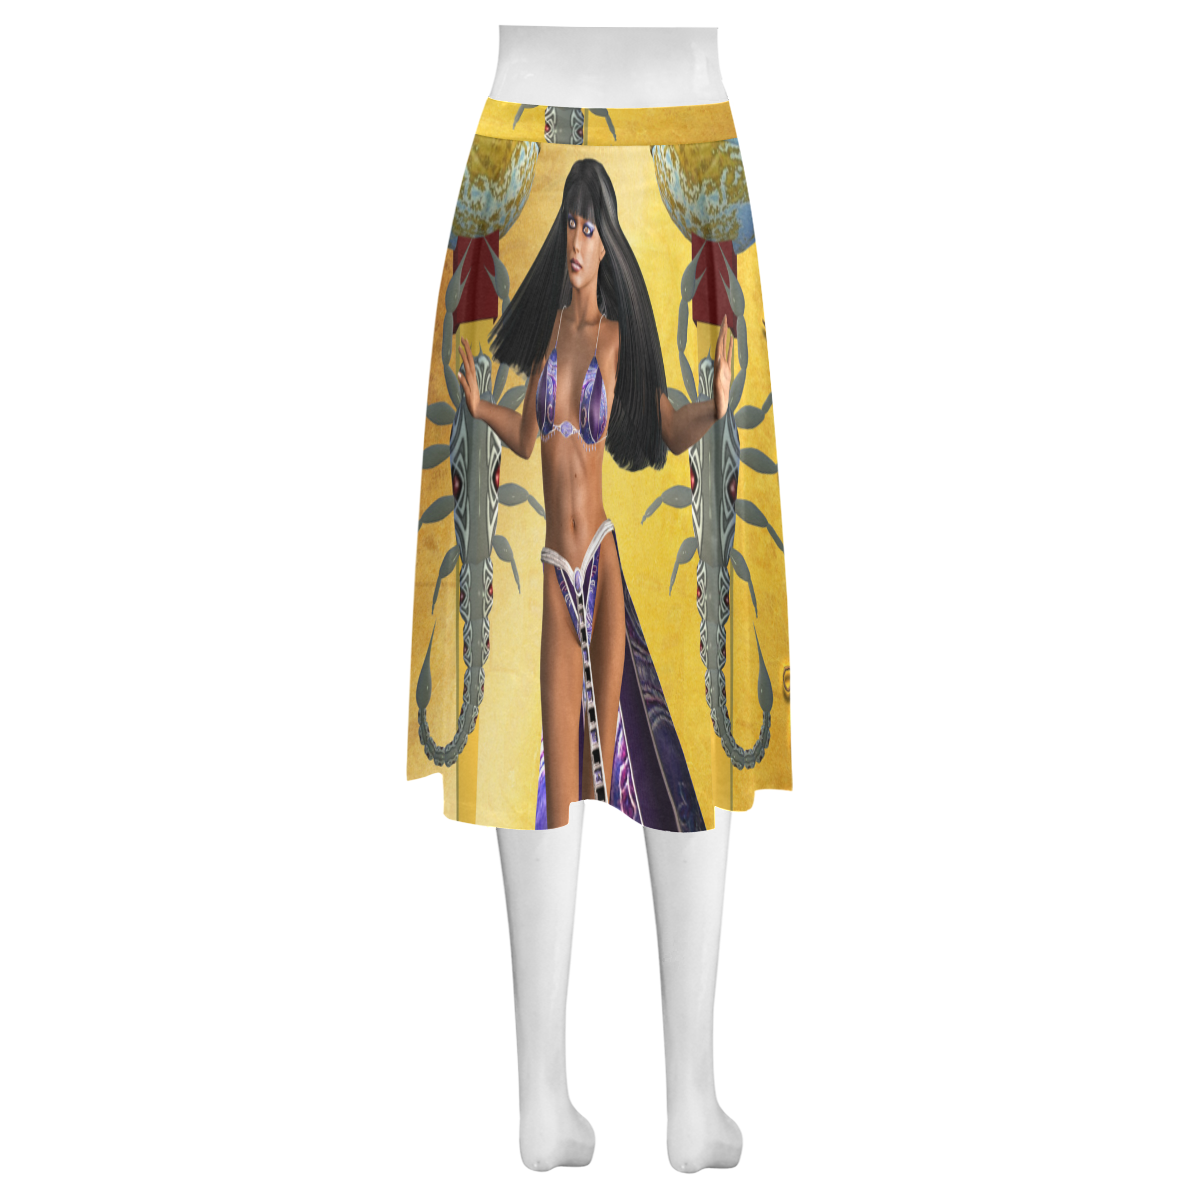 Egyptian women with scorpion Mnemosyne Women's Crepe Skirt (Model D16)